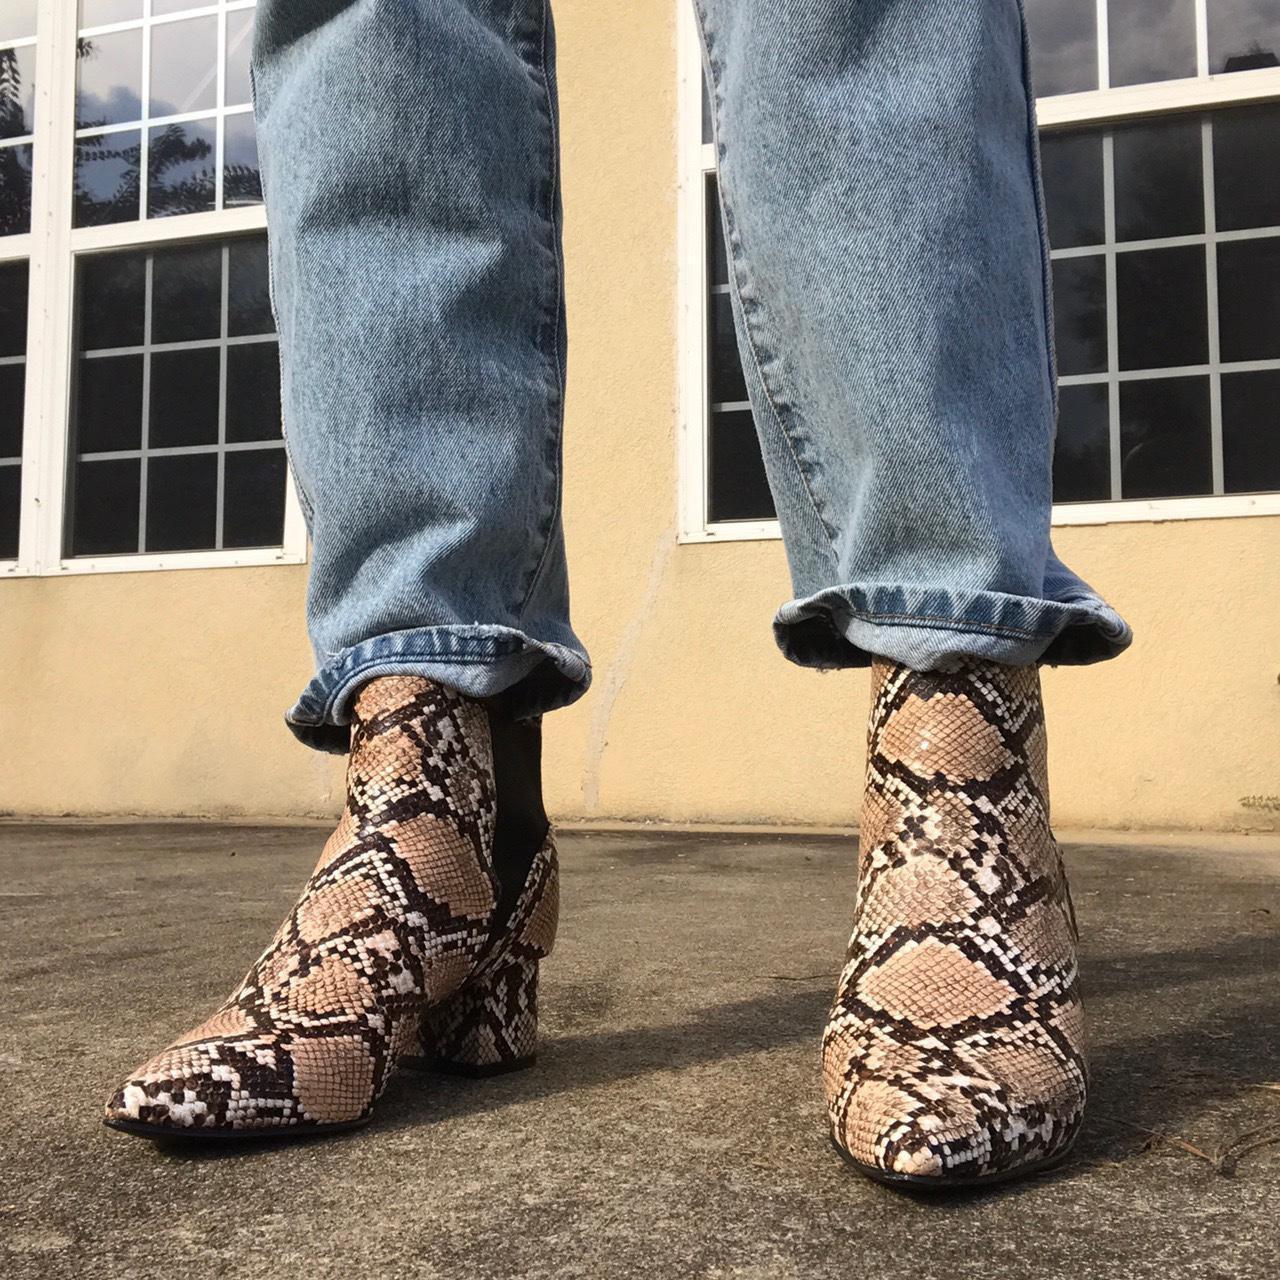 Product Image 2 - Snakeskin Ankle Booties ✨

✿ Lulu’s
✿